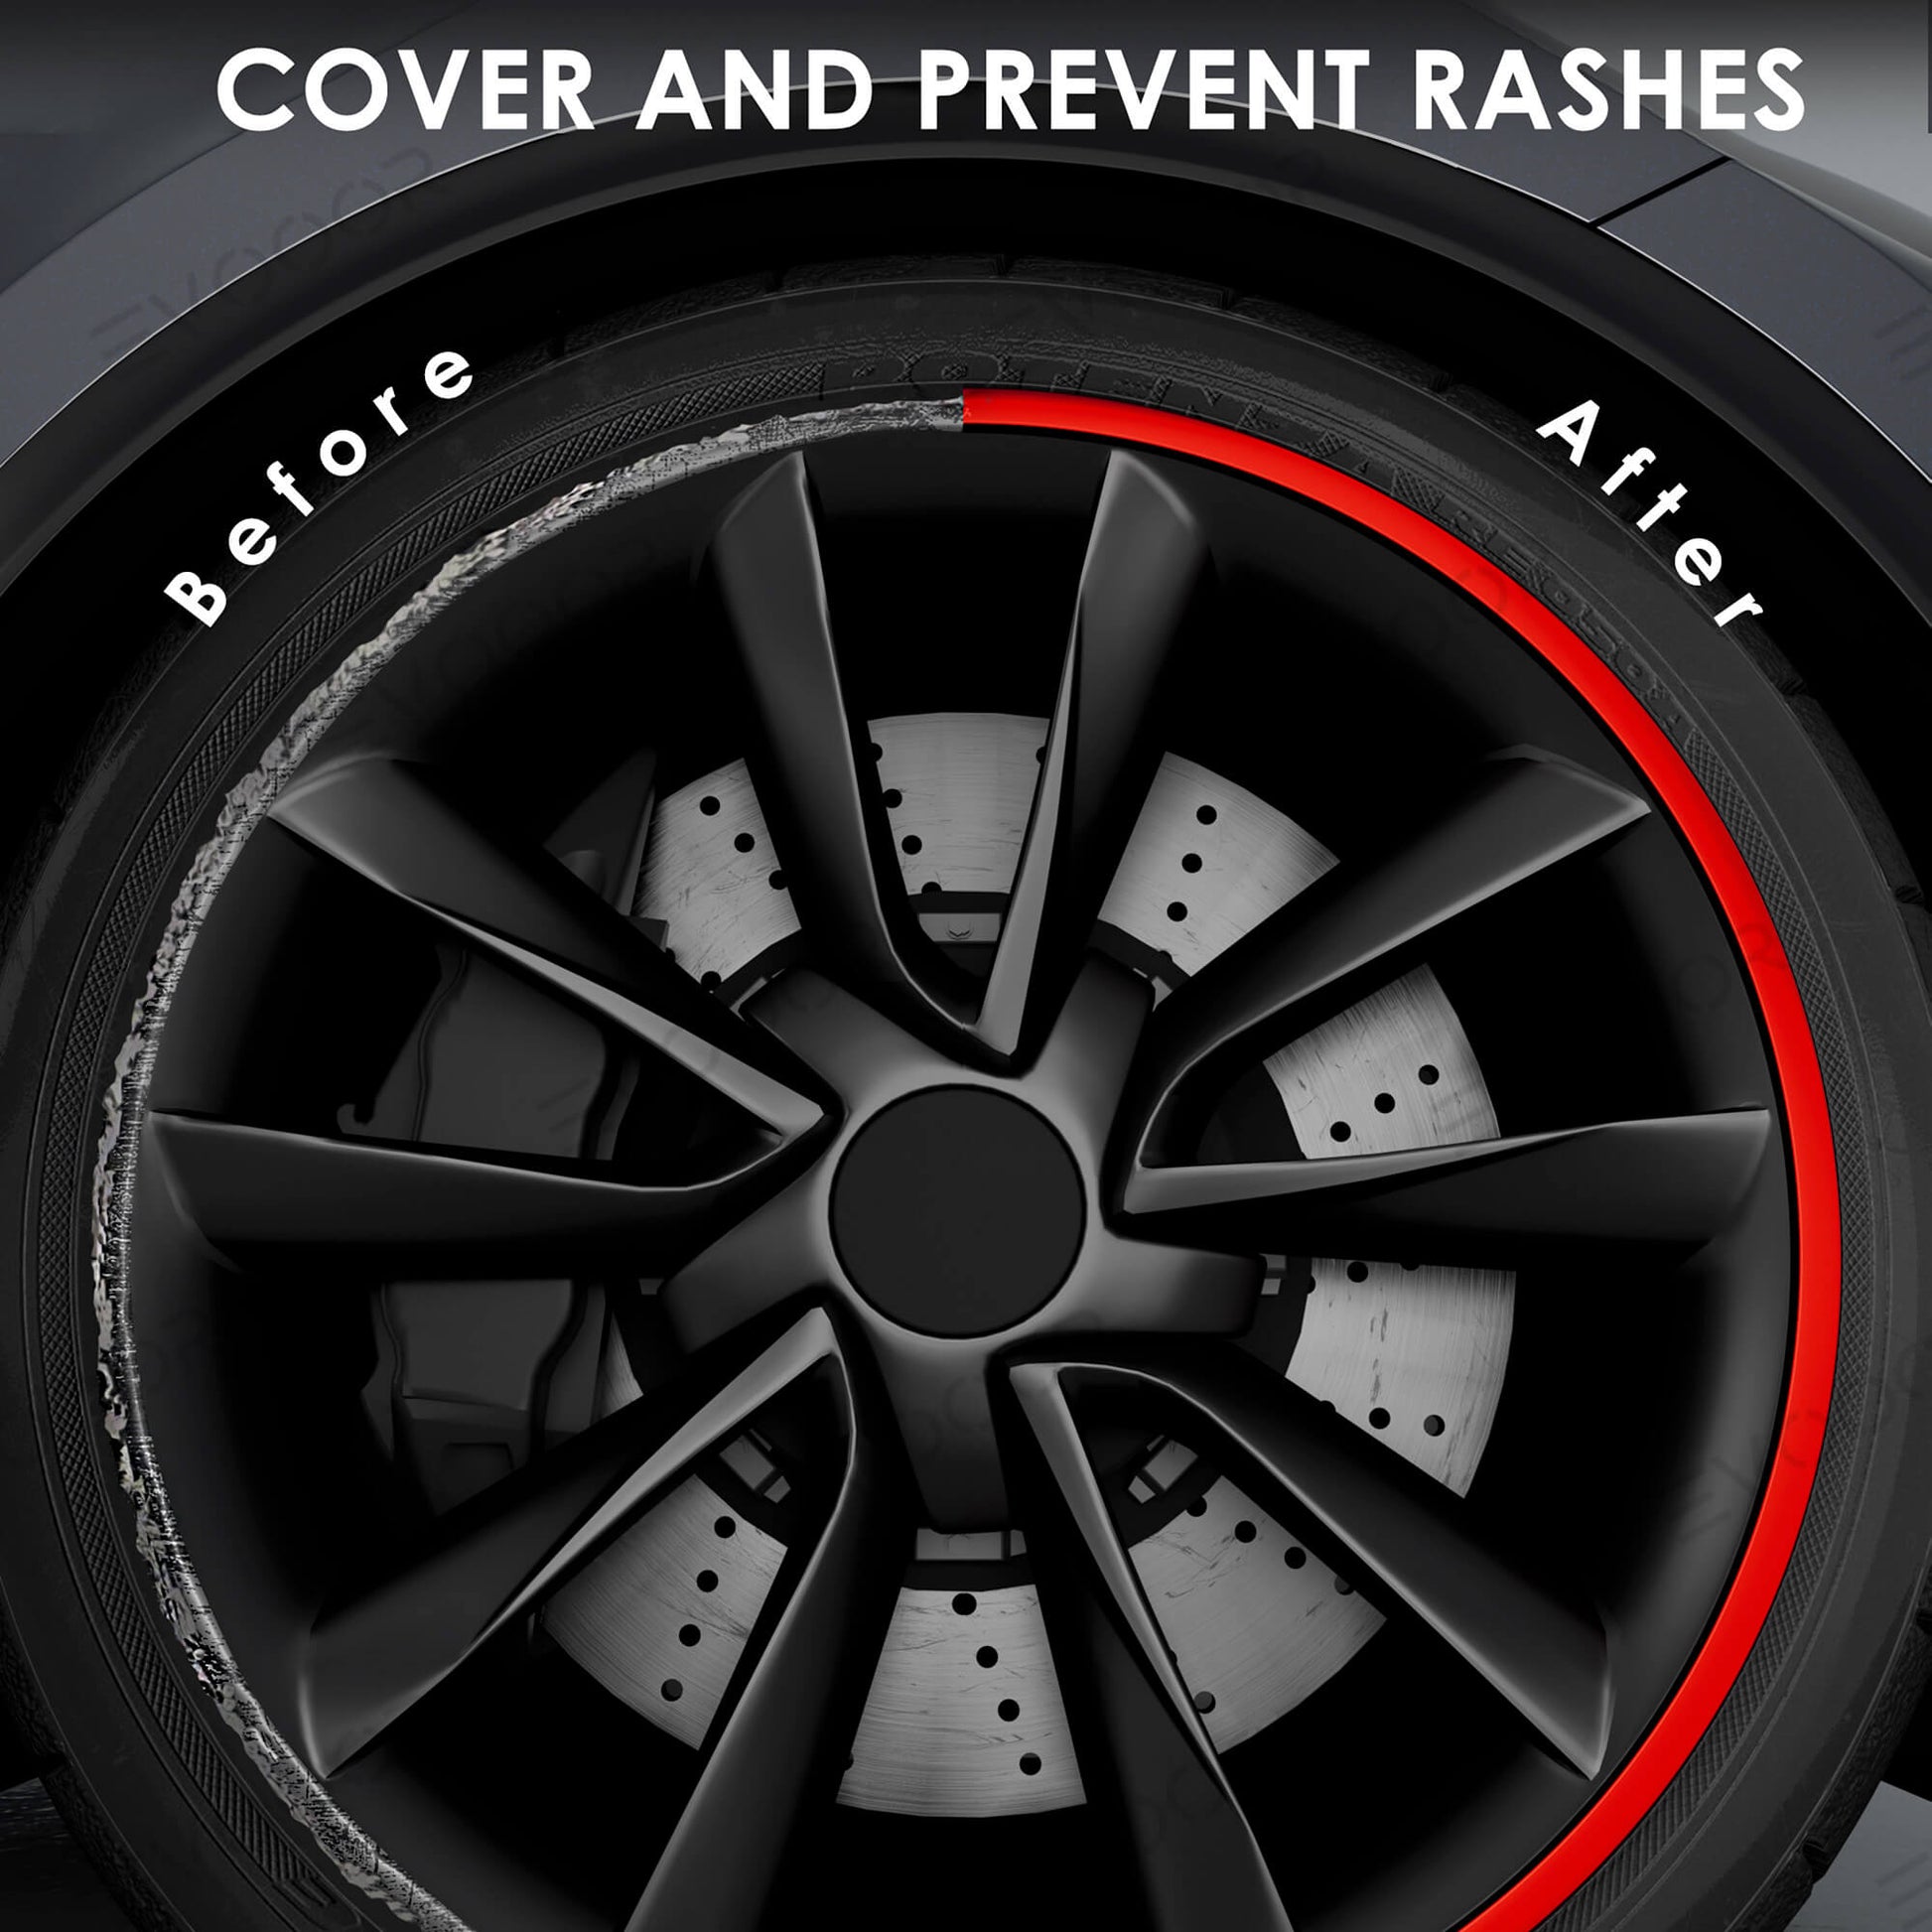 Aluminum Alloy Wheel Rim Protector for Tesla All Models 3/Y/S/X (4 PC